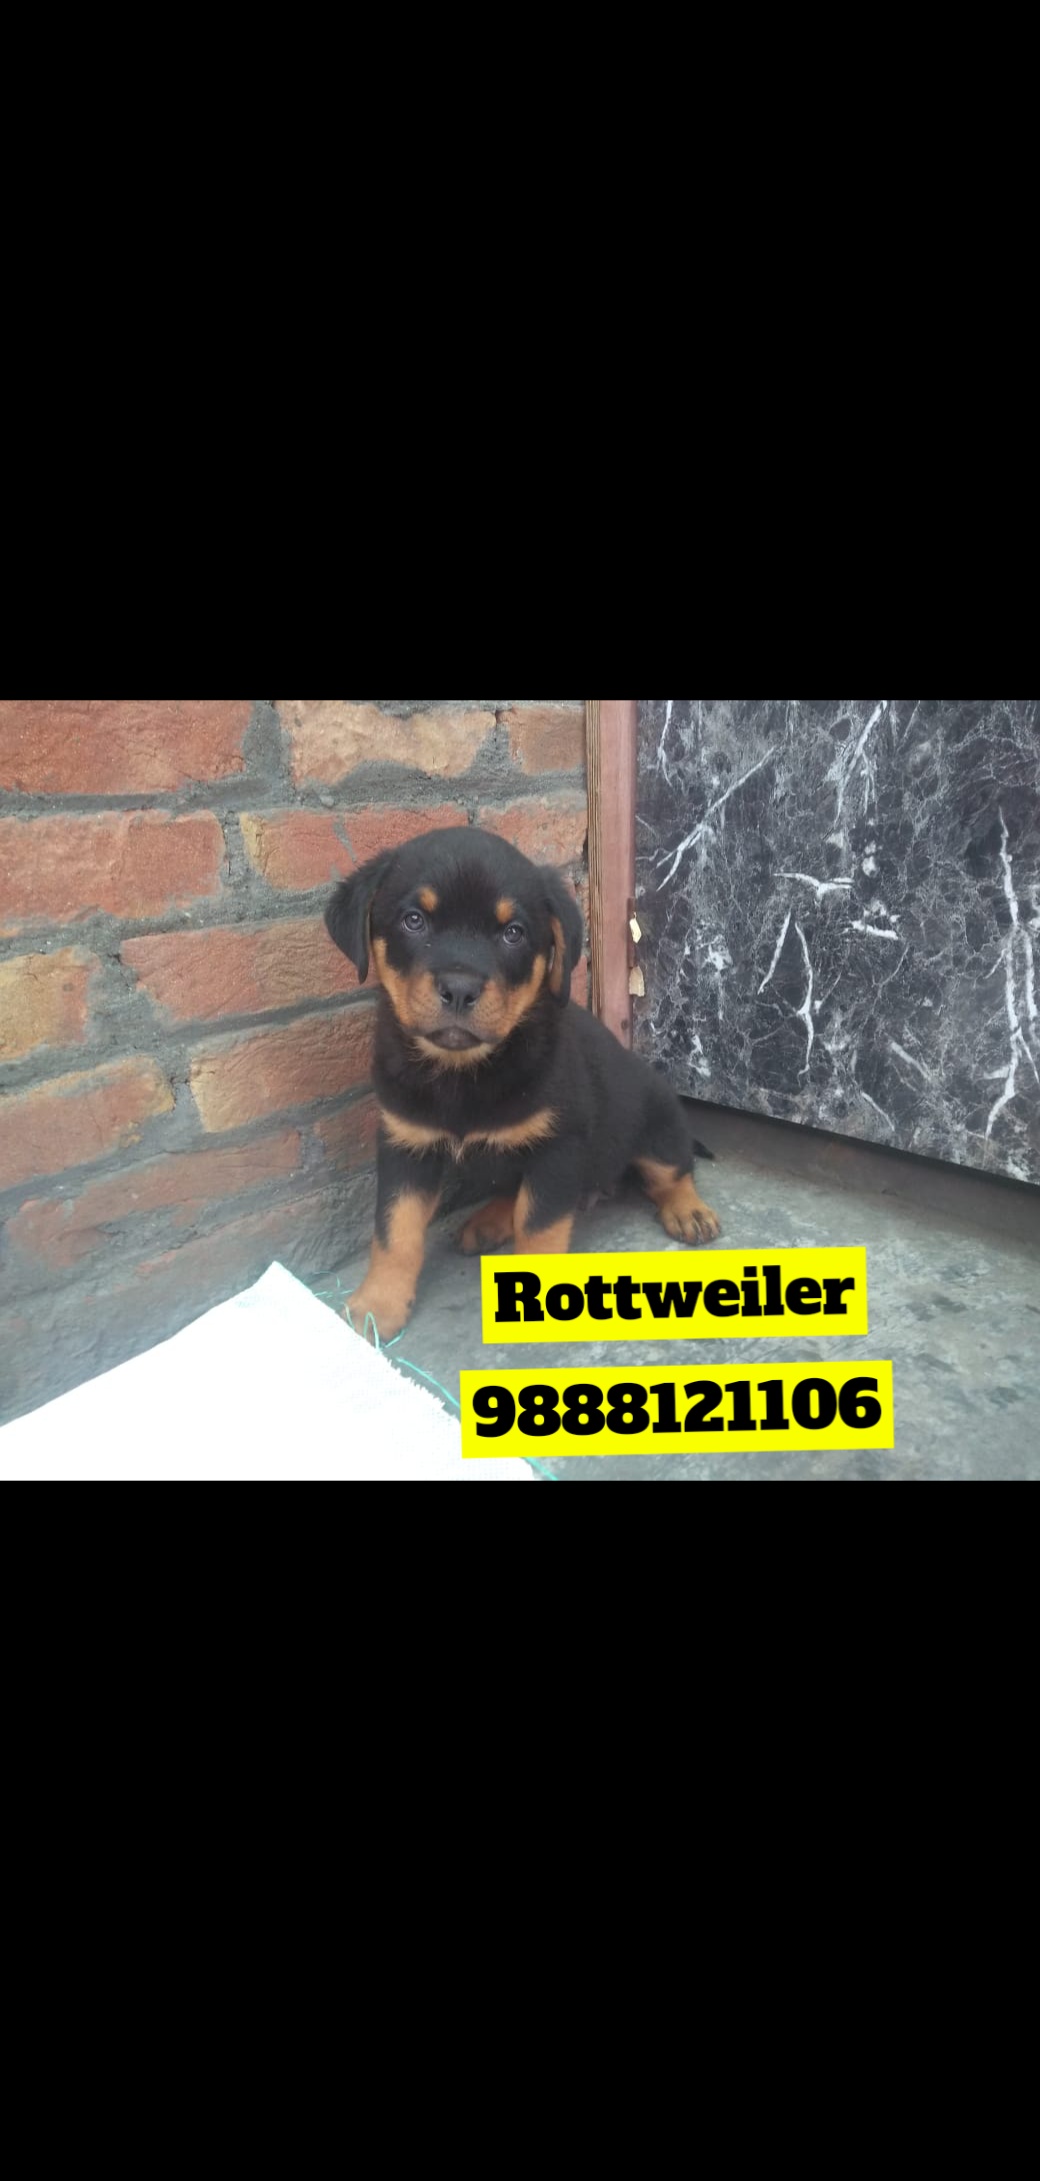 Rottweiler puppy price jalandhar dog price punjab call 9888121106